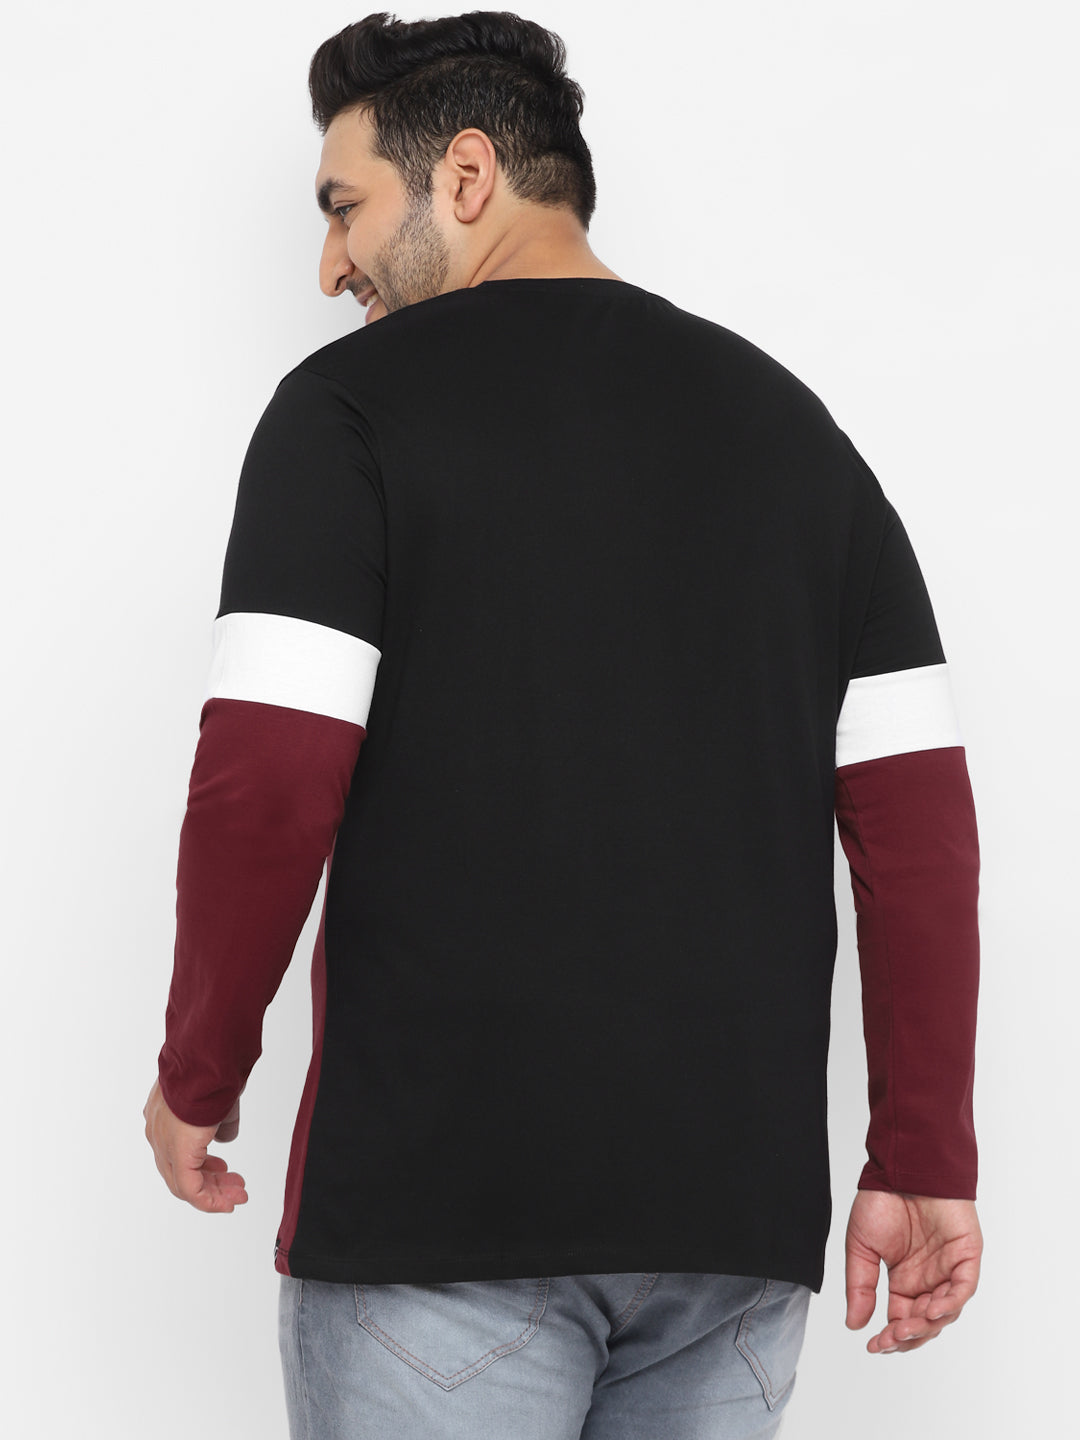 Plus Men's Black, White, Maroon Color-Block Regular Fit Full Sleeve Cotton T-Shirt